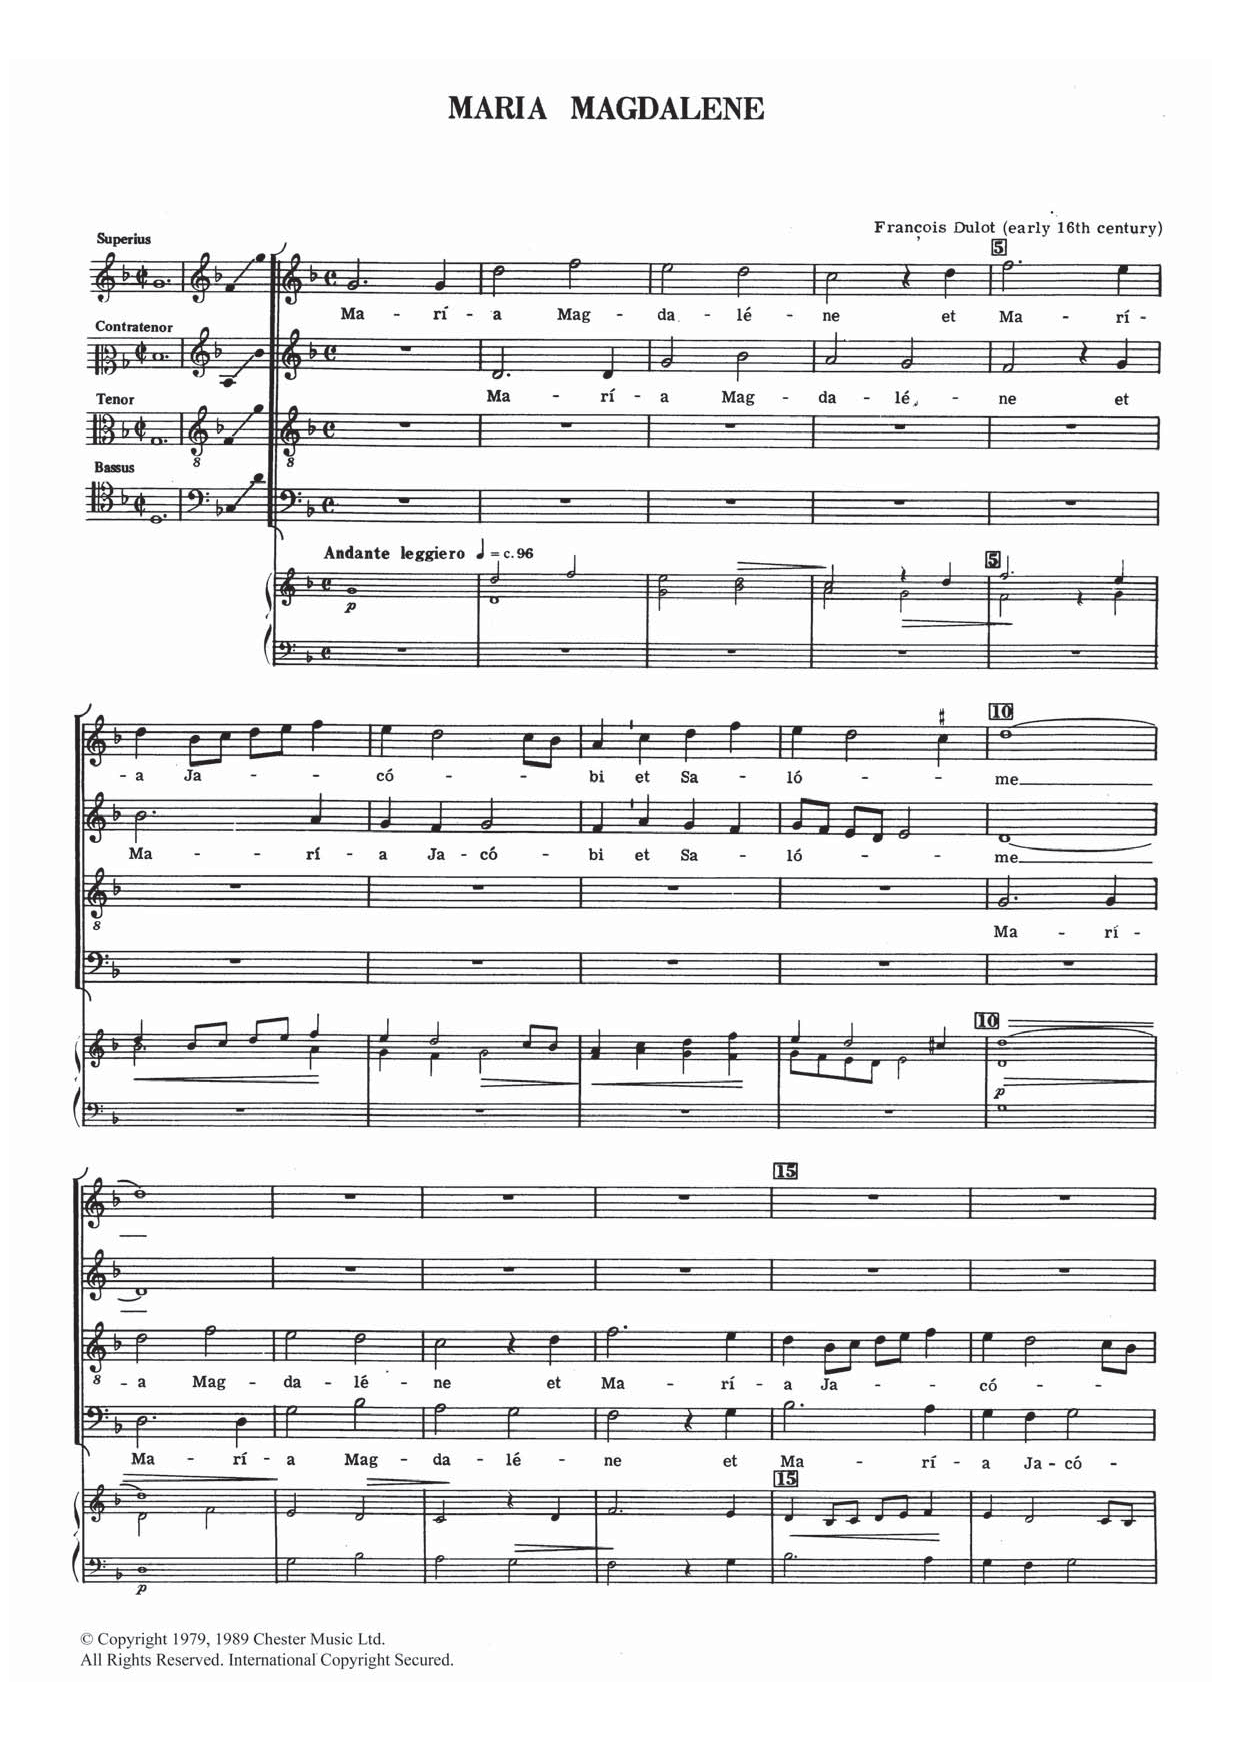 Francois Dulot Maria Magdalene Sheet Music Notes & Chords for SATB - Download or Print PDF